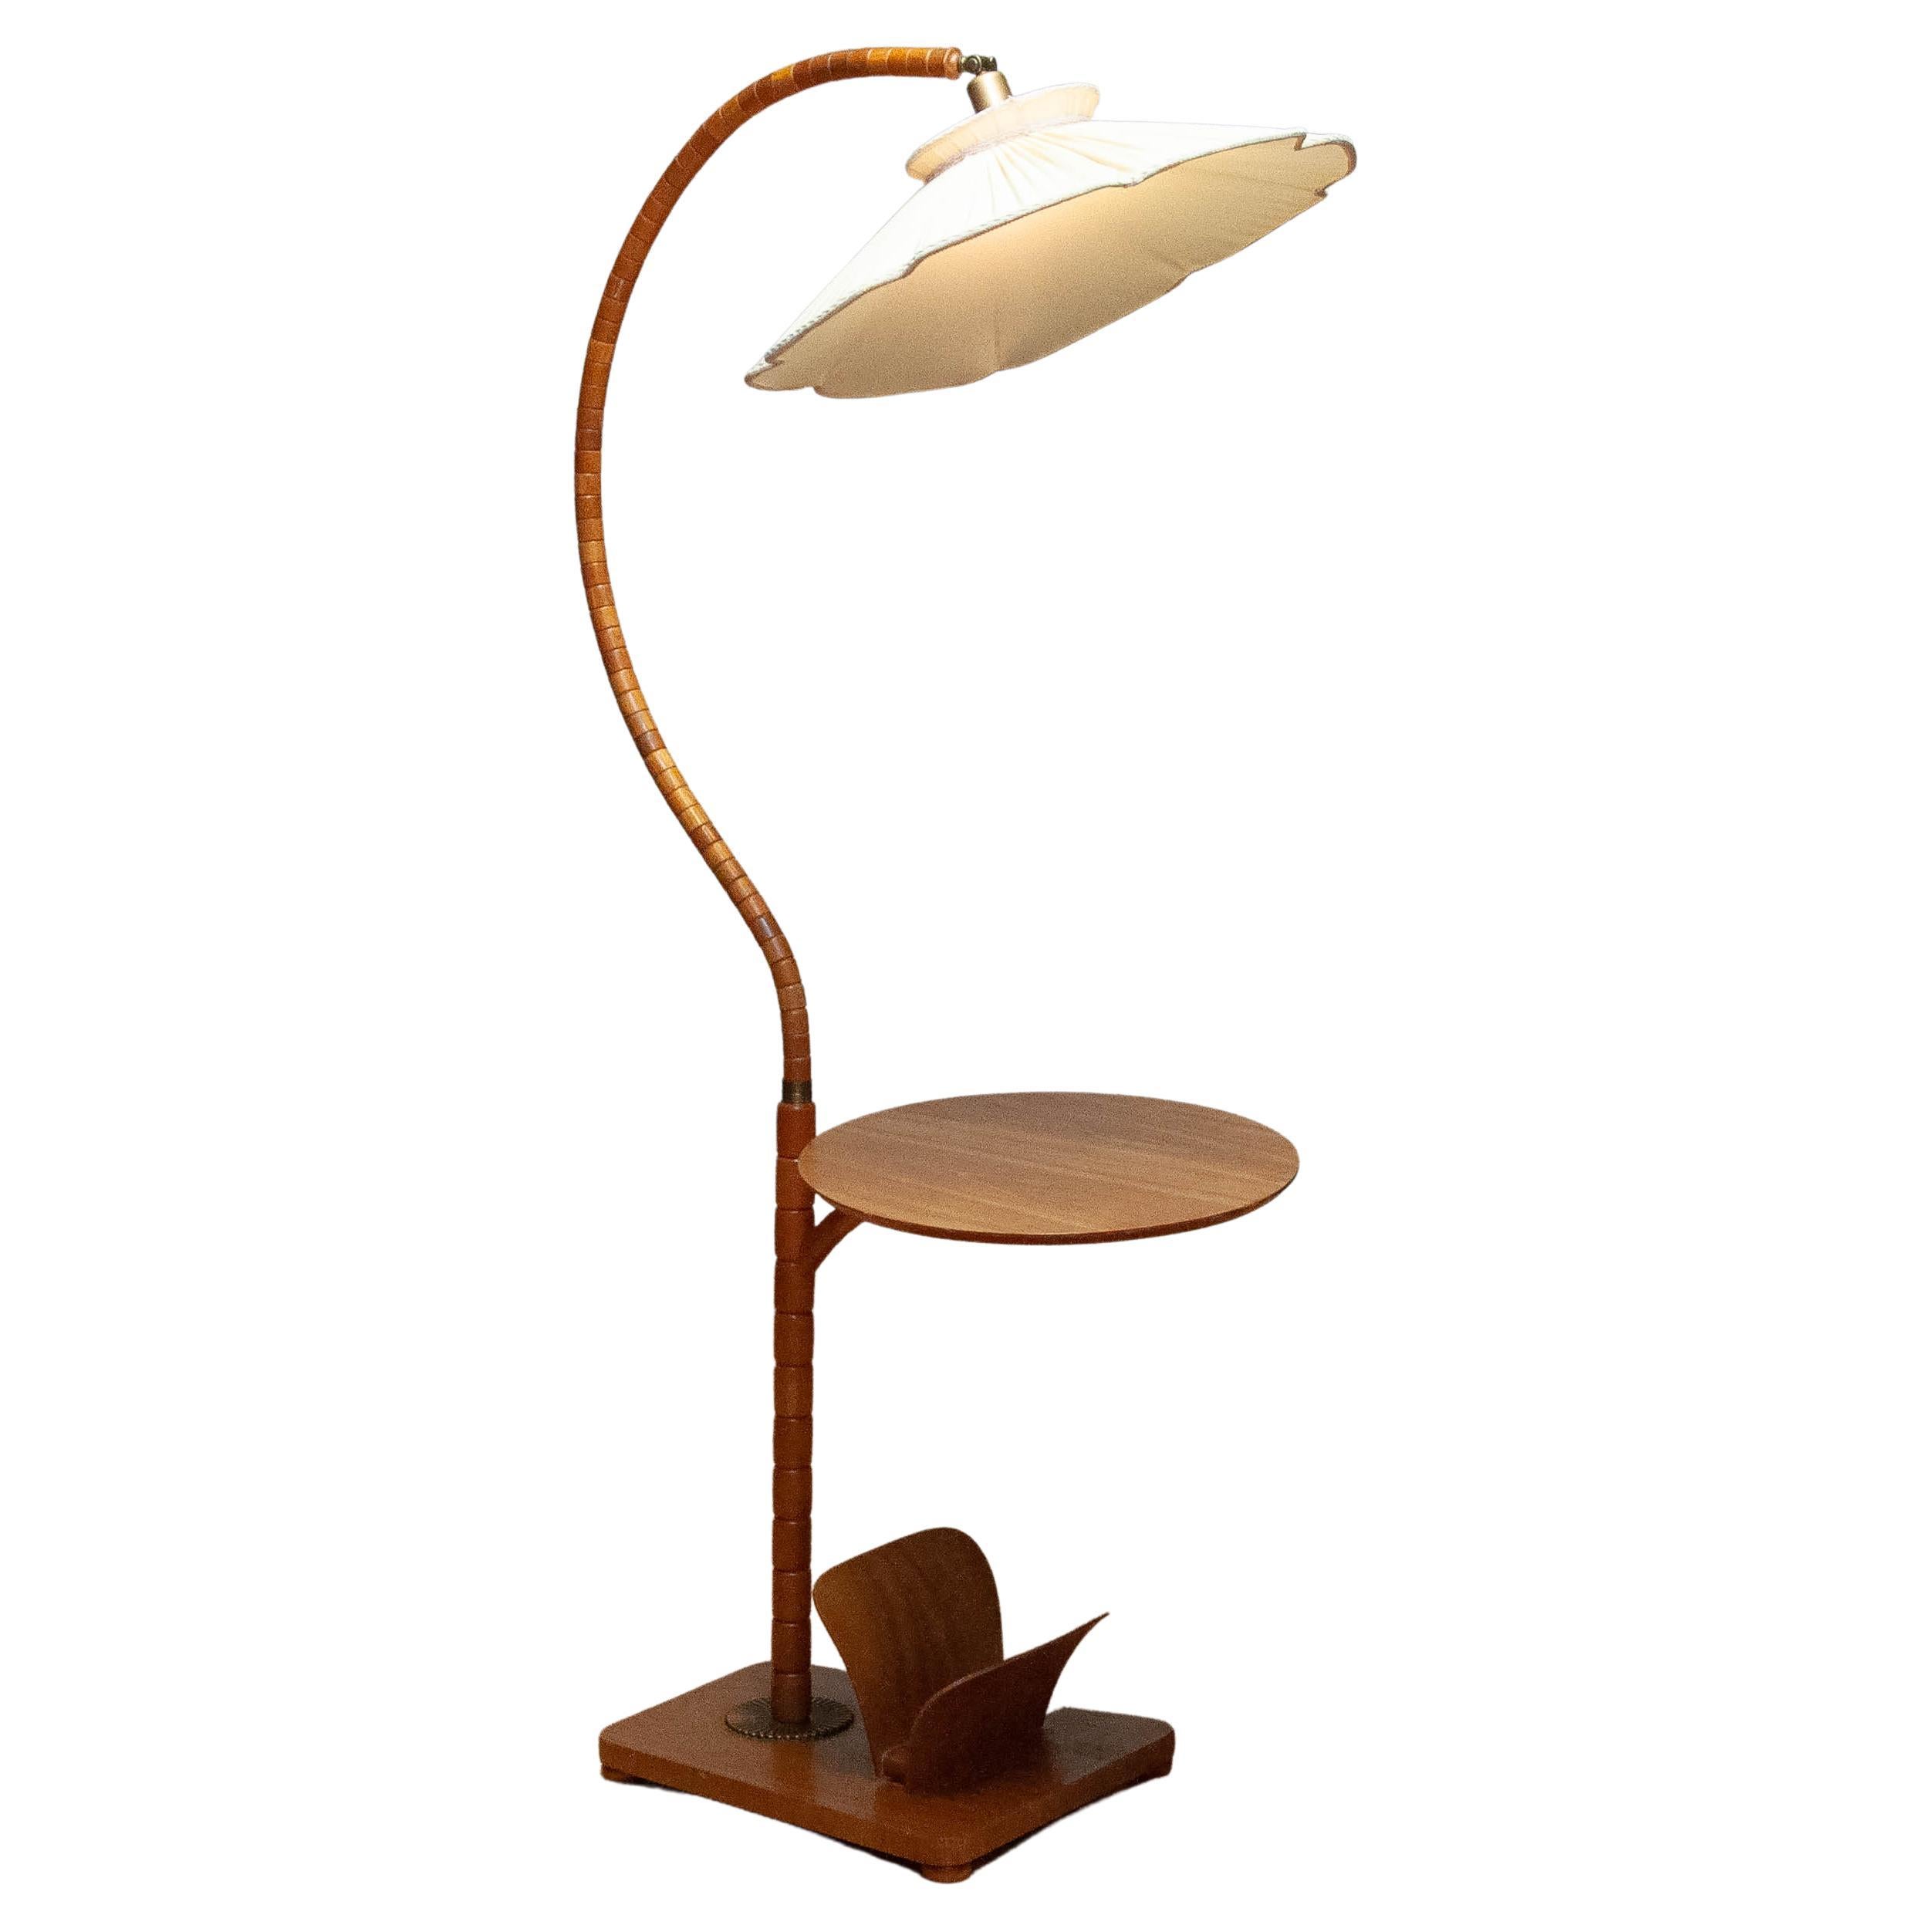 1940s Swedish Art Nouveau Floor Lamp In Elm Wood And Elm Table By IWO Mariestad